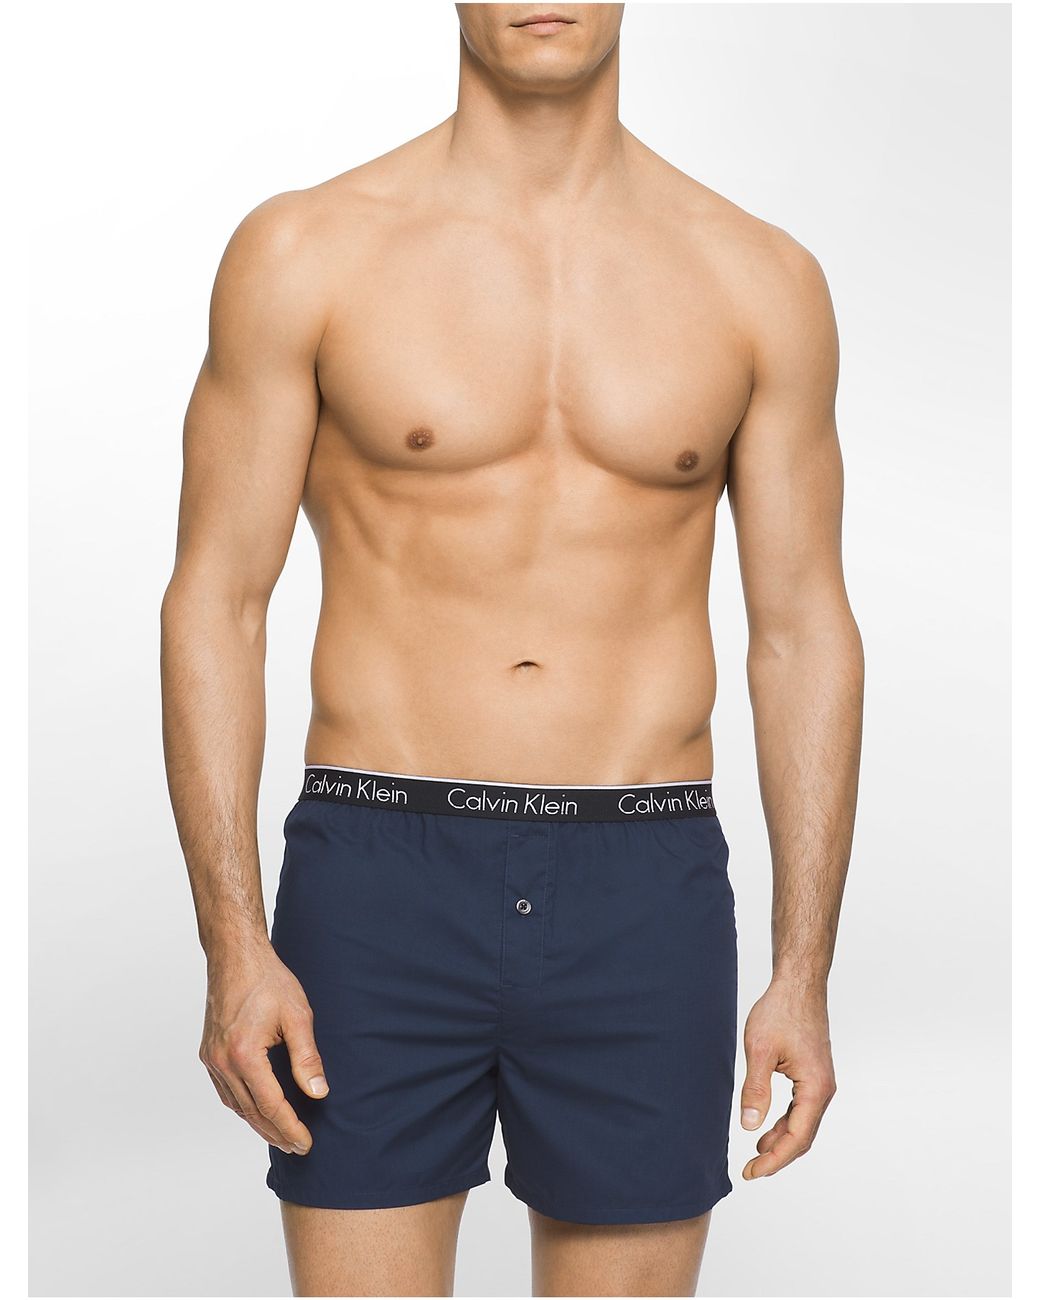 Calvin Klein Underwear Ck One Skinny Jean Boxer in Blue for Men